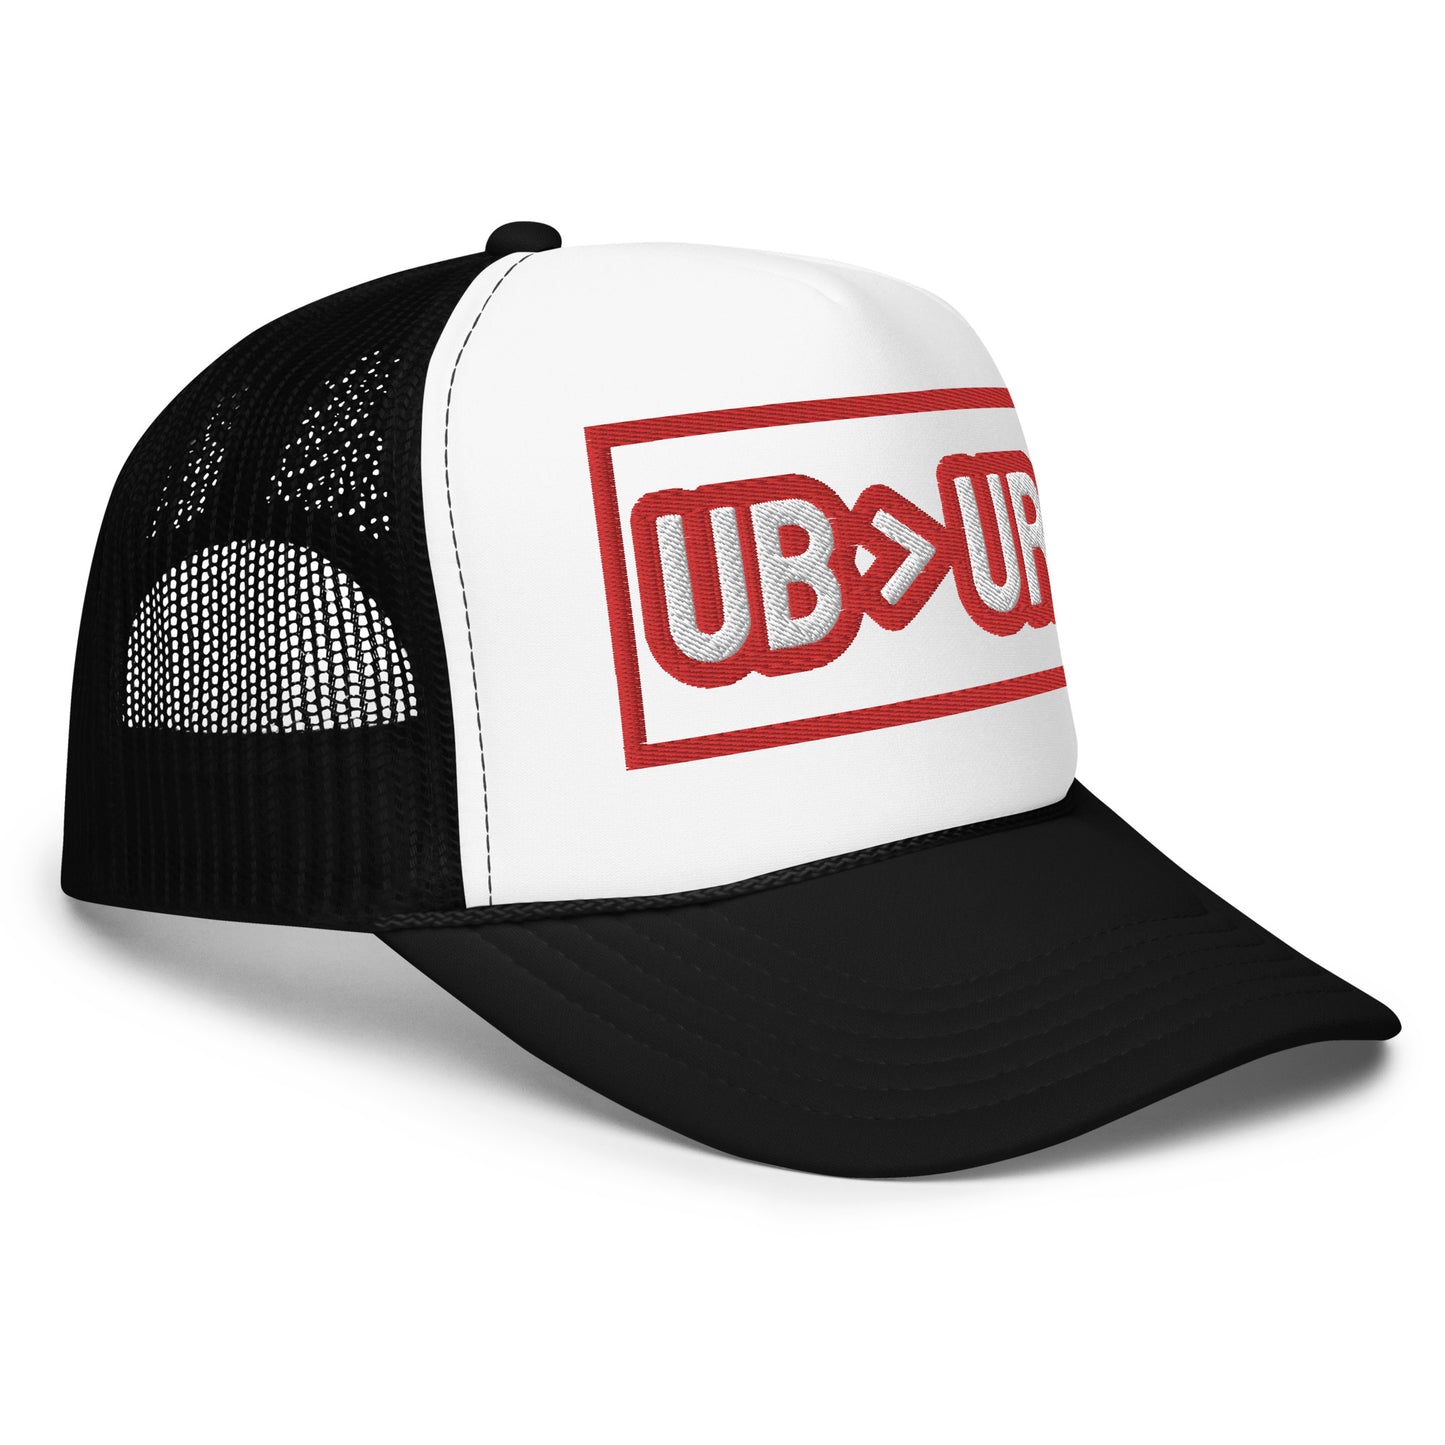 UB>UR-Foam trucker hat, white/red letters